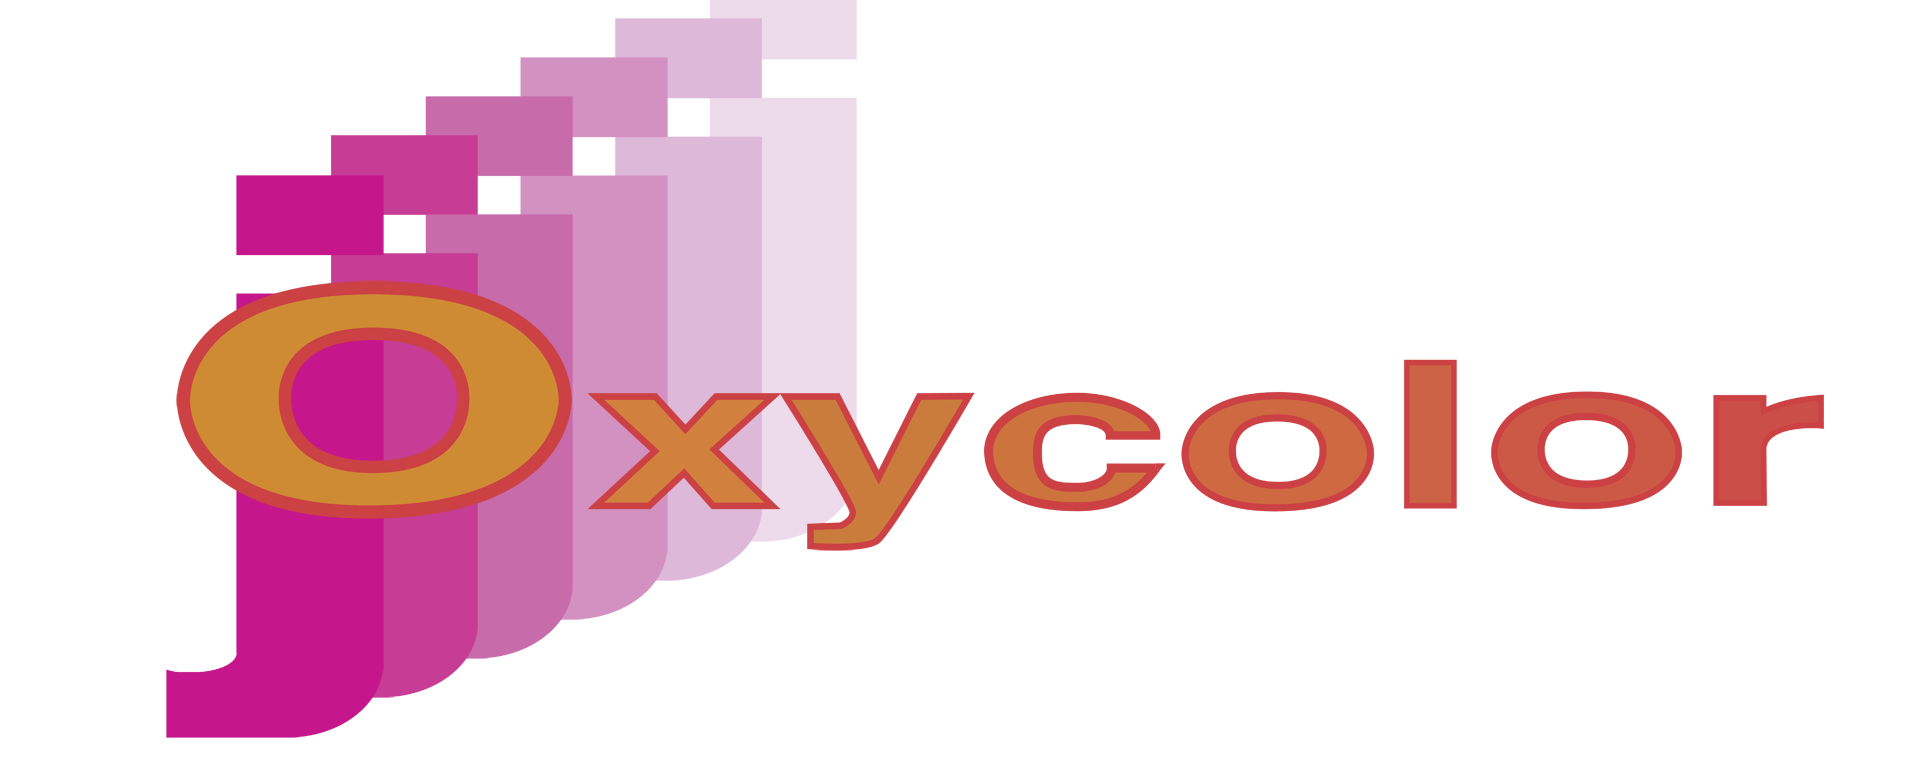 Oxycolor